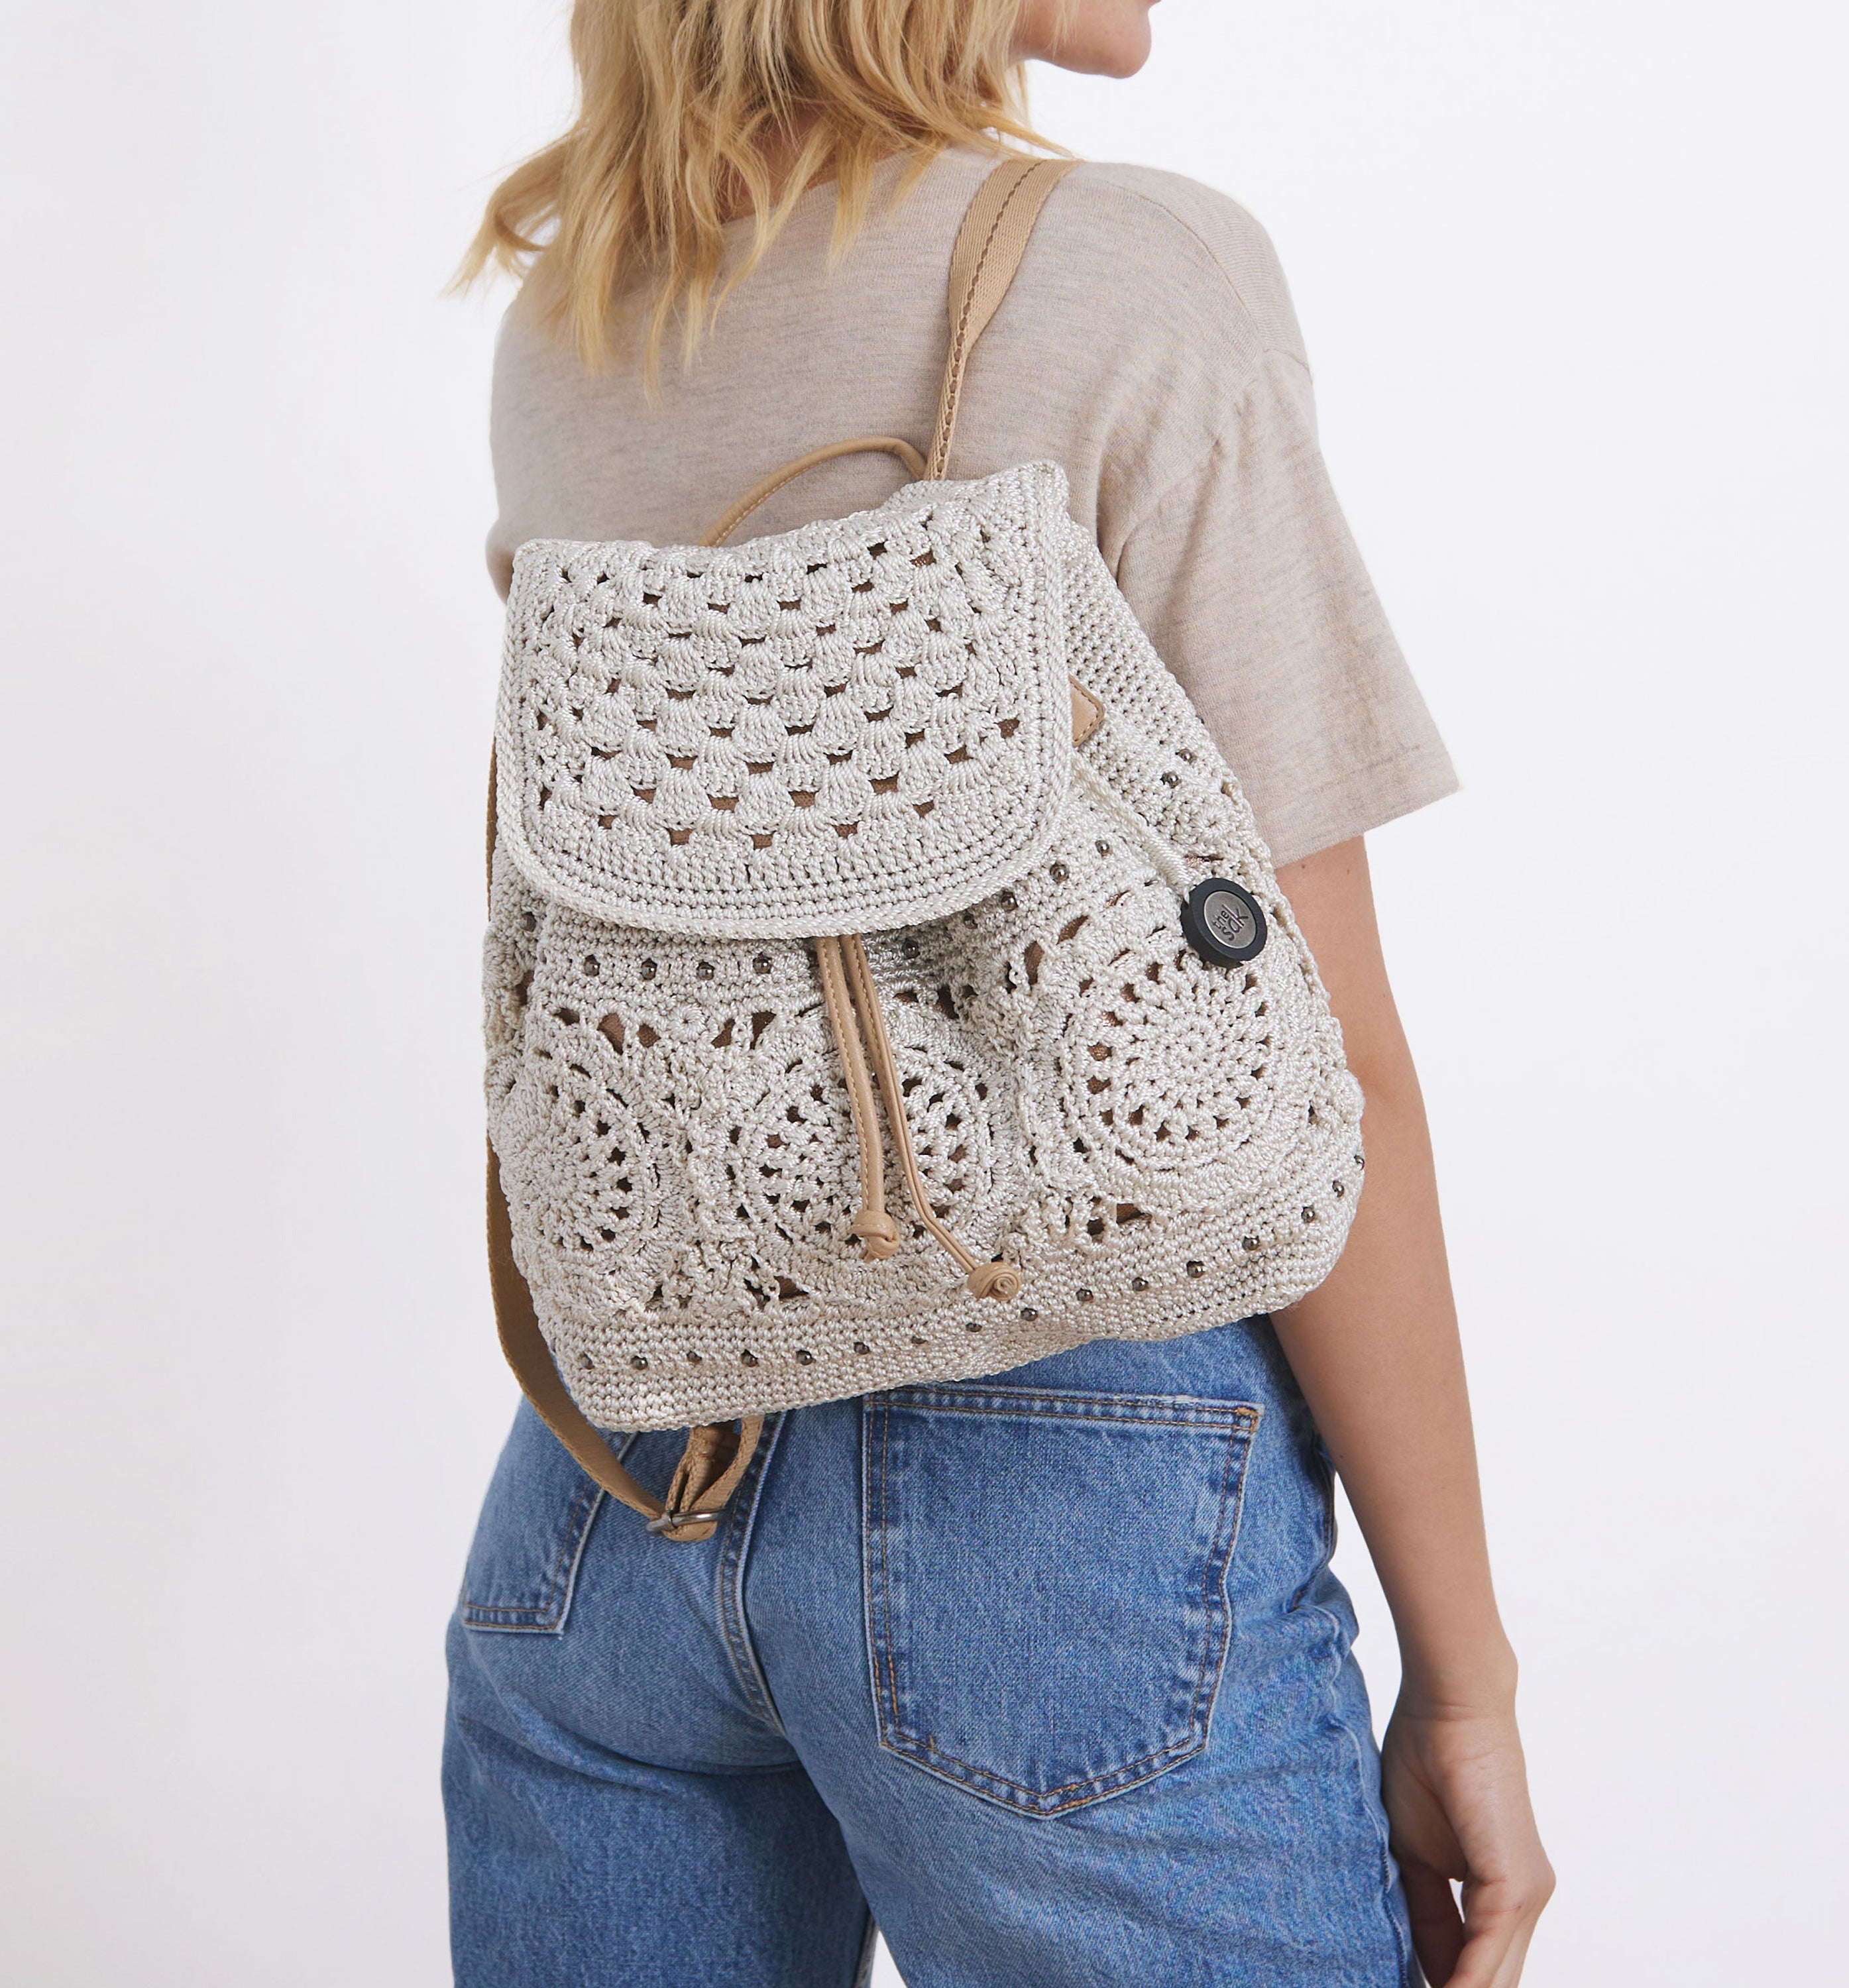 Sayulita Backpack, Crochet Backpacks